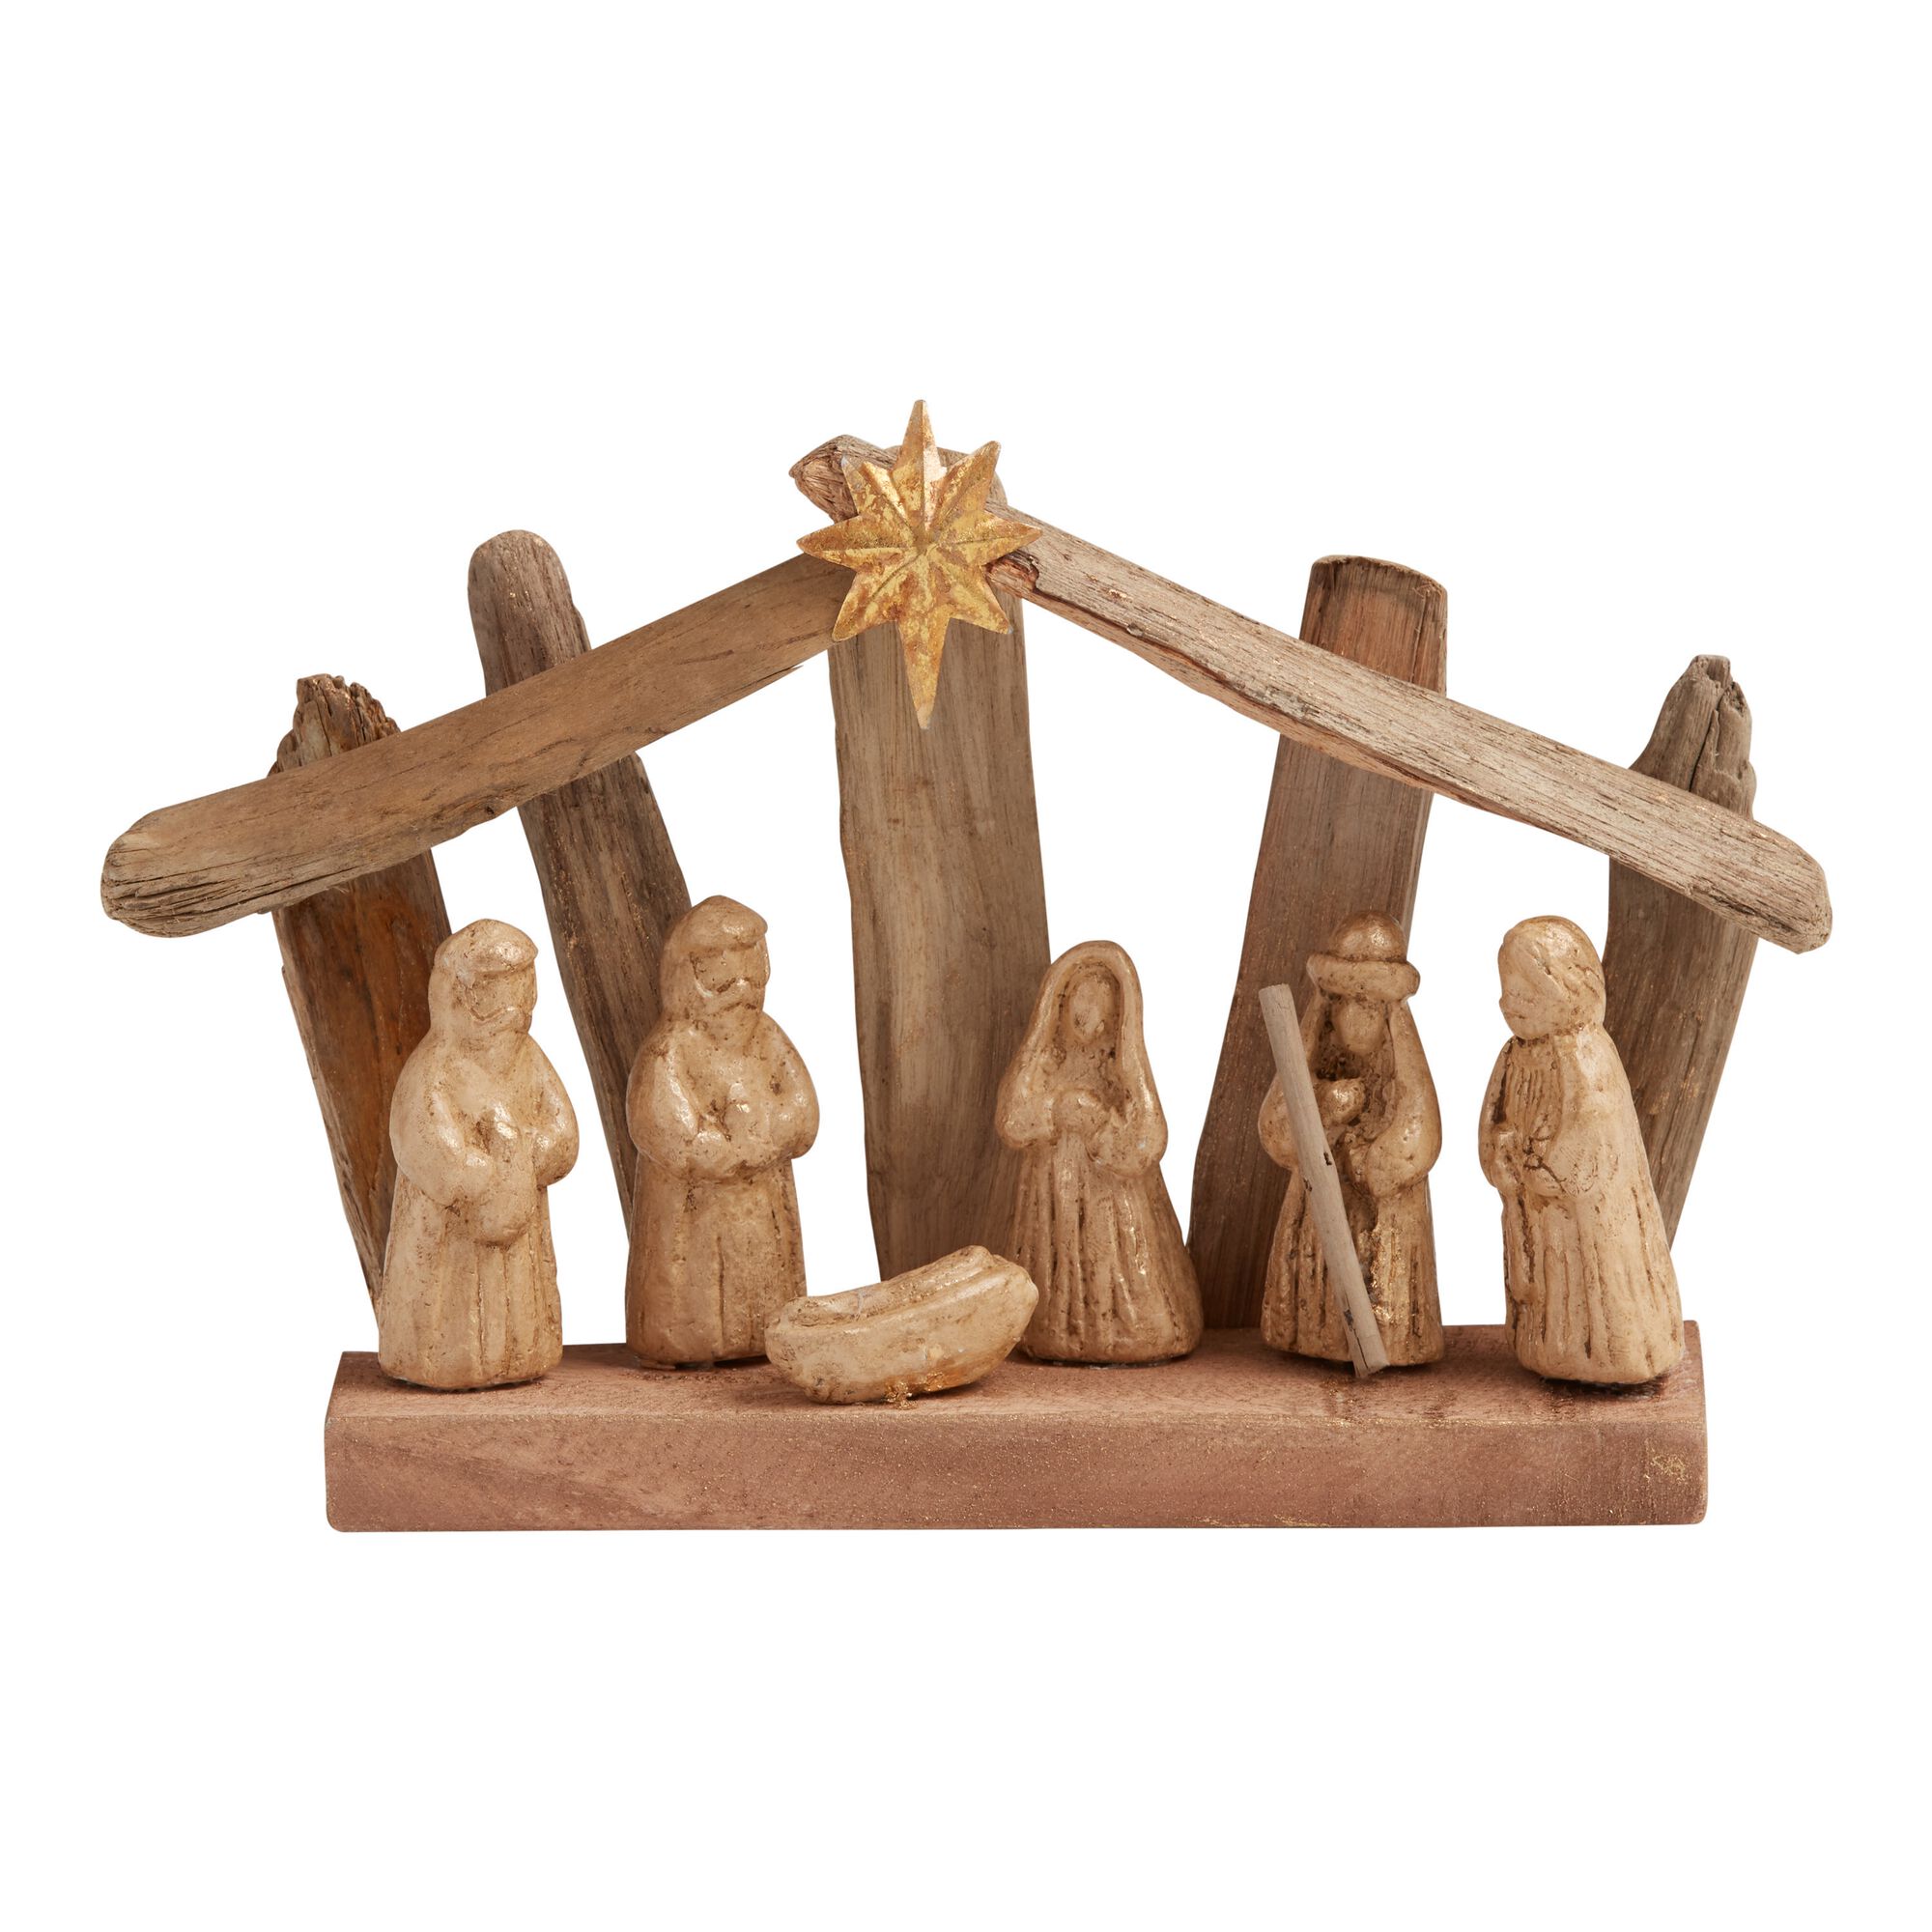 Driftwood and Paper Pulp Nativity Scene Decor - World Market